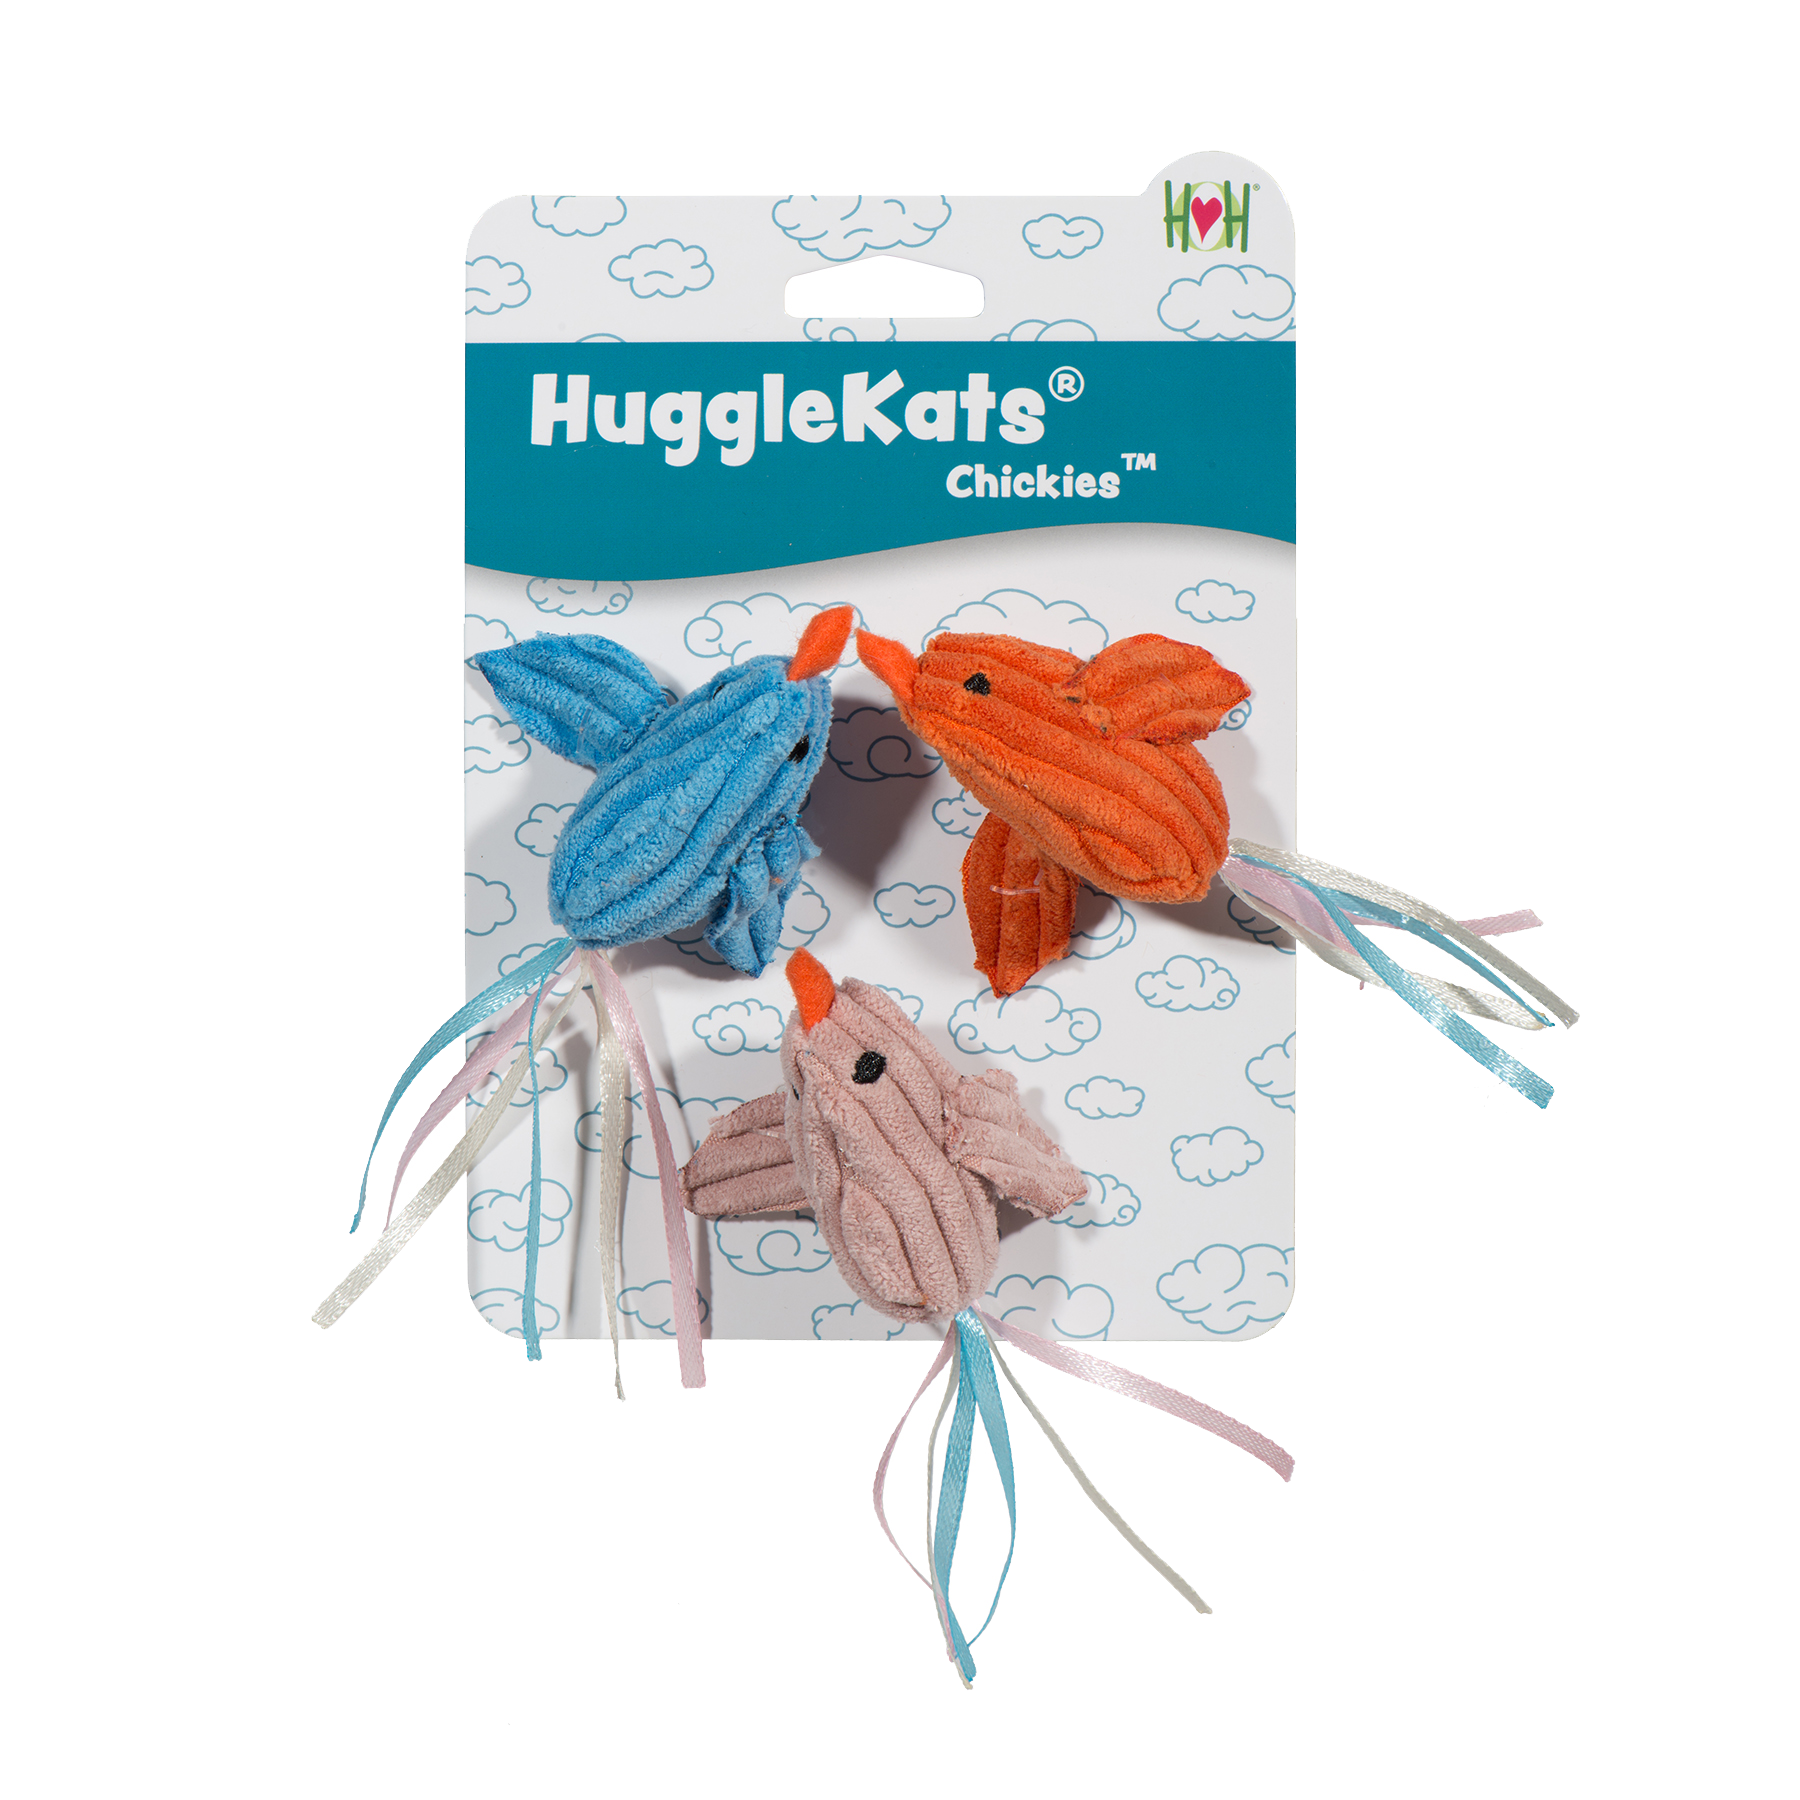 HuggleKats® Chickies Cat Toys, 3 Pack